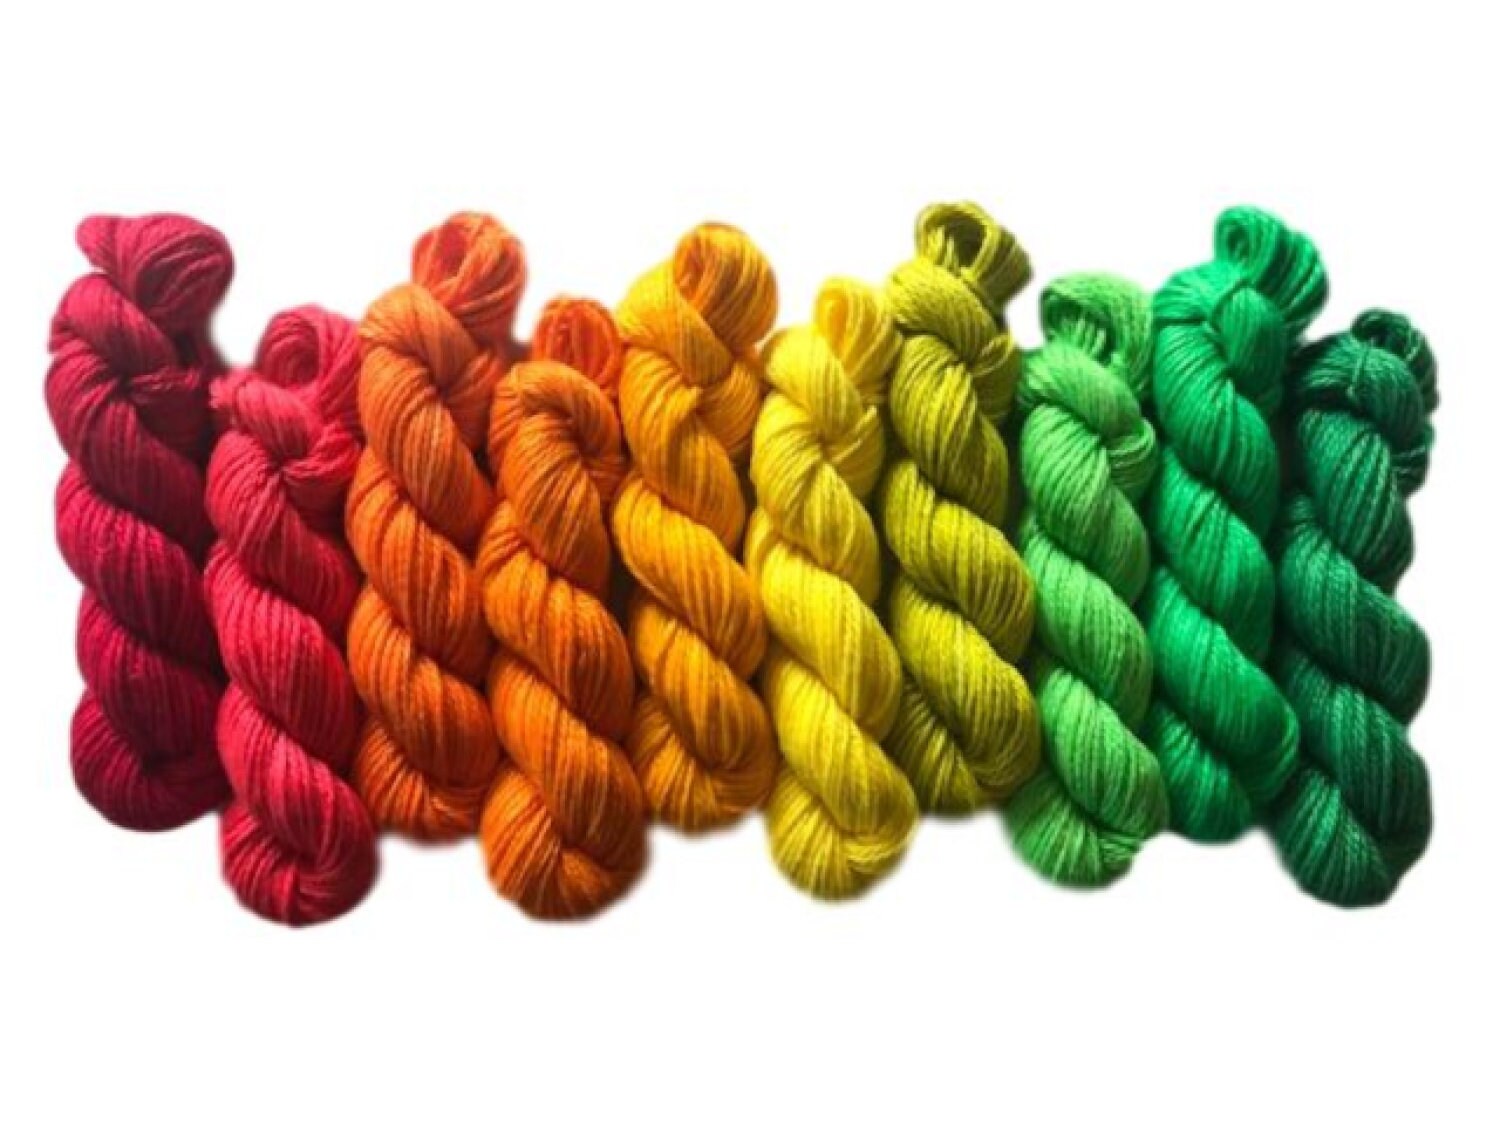 Hand Dyed Rainbow Fiber Set - Vegan (Bamboo Cotton) - Ten 53 yd DK / Light Worsted Mini Skeins - Semi Solids / Tonals - 3 Ply Baby / Sport